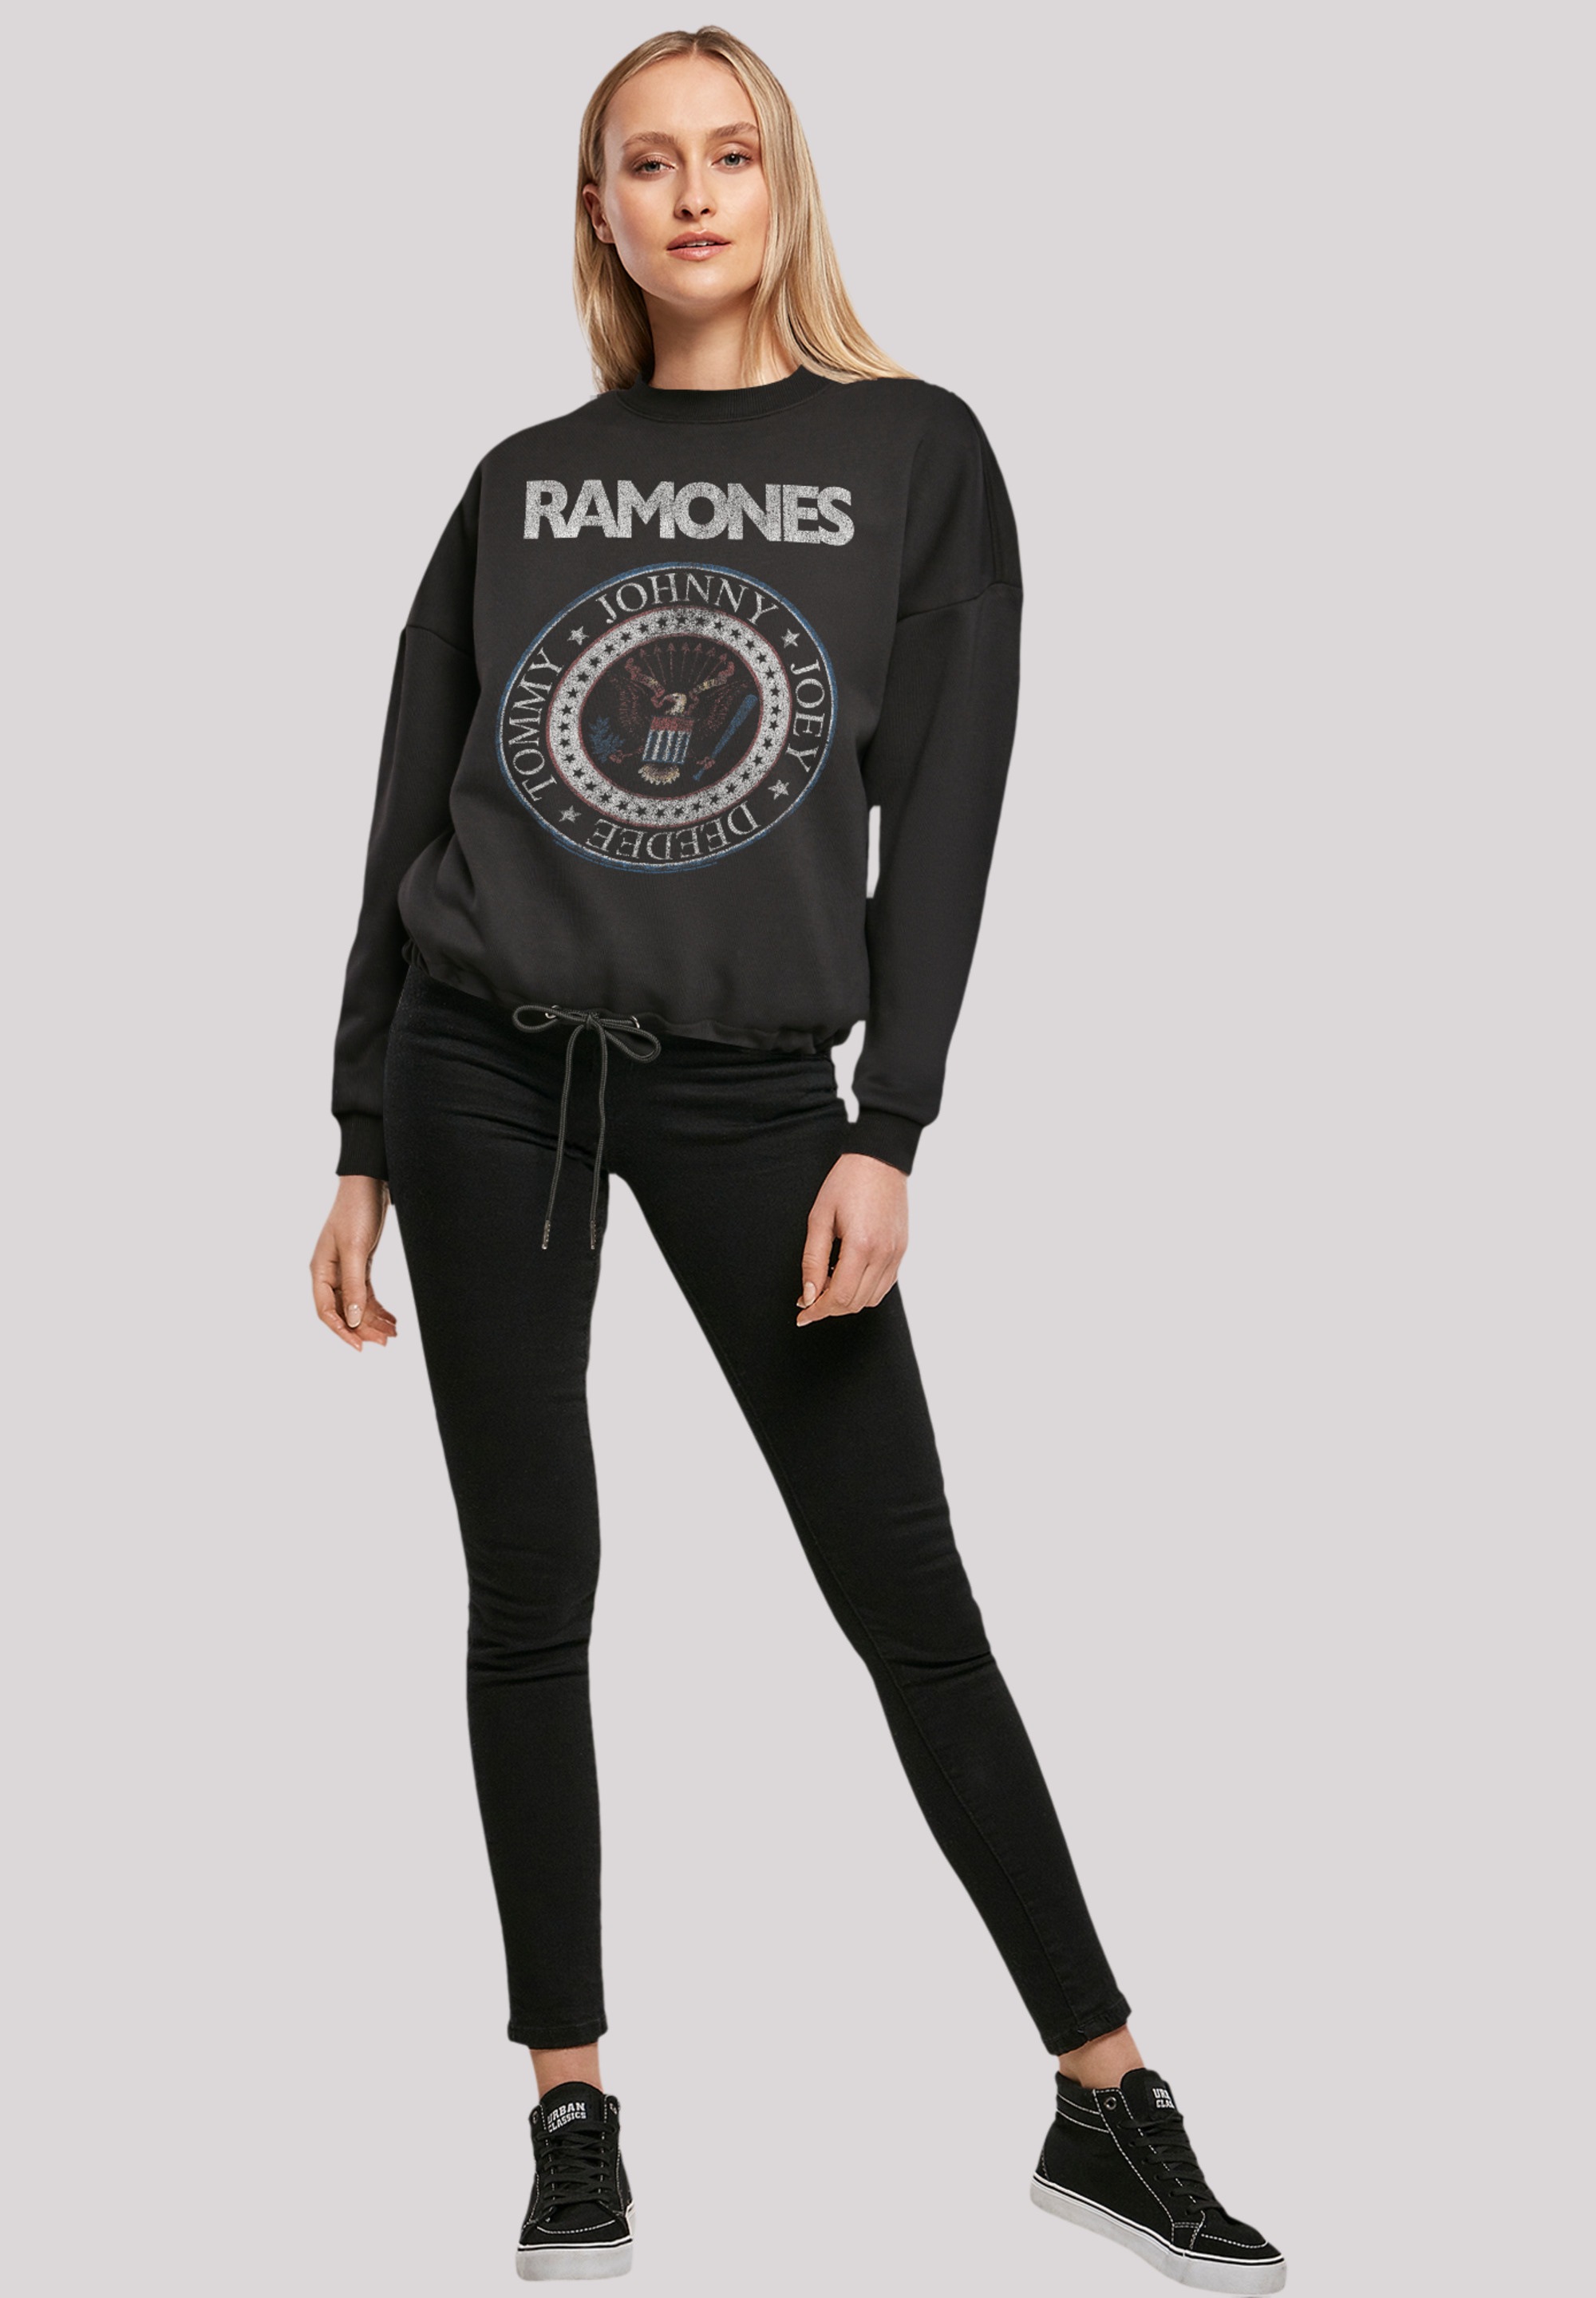 walking »Ramones I\'m | Premium kaufen And Rock-Musik Seal«, Band, Rock Sweatshirt Qualität, Red Band Musik White online F4NT4STIC